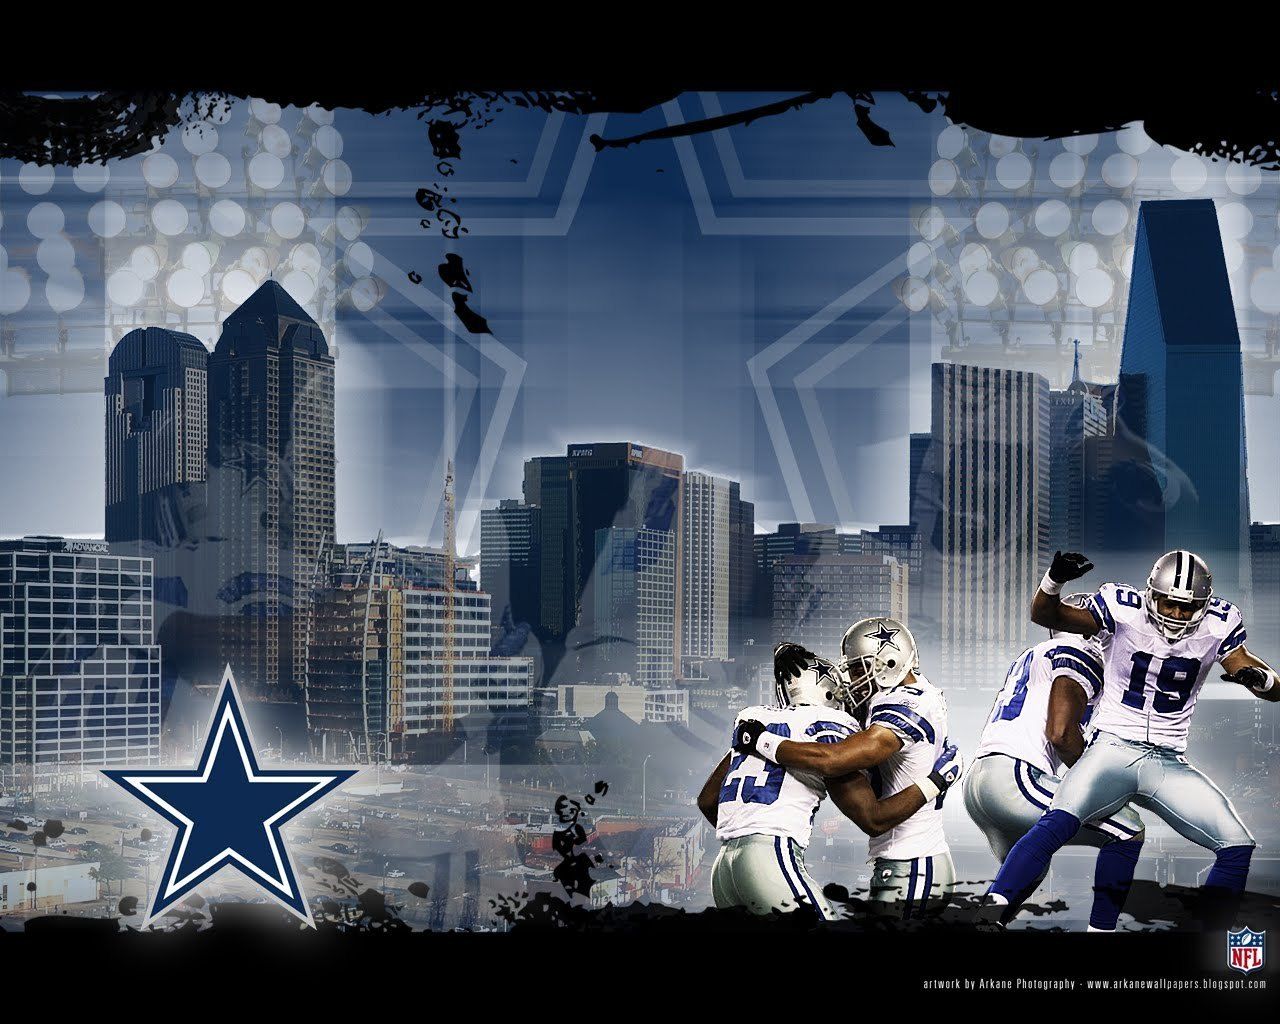 Dallas Cowboys Wallpaper on Pinterest | Dallas Cowboys, Dez Bryant ...